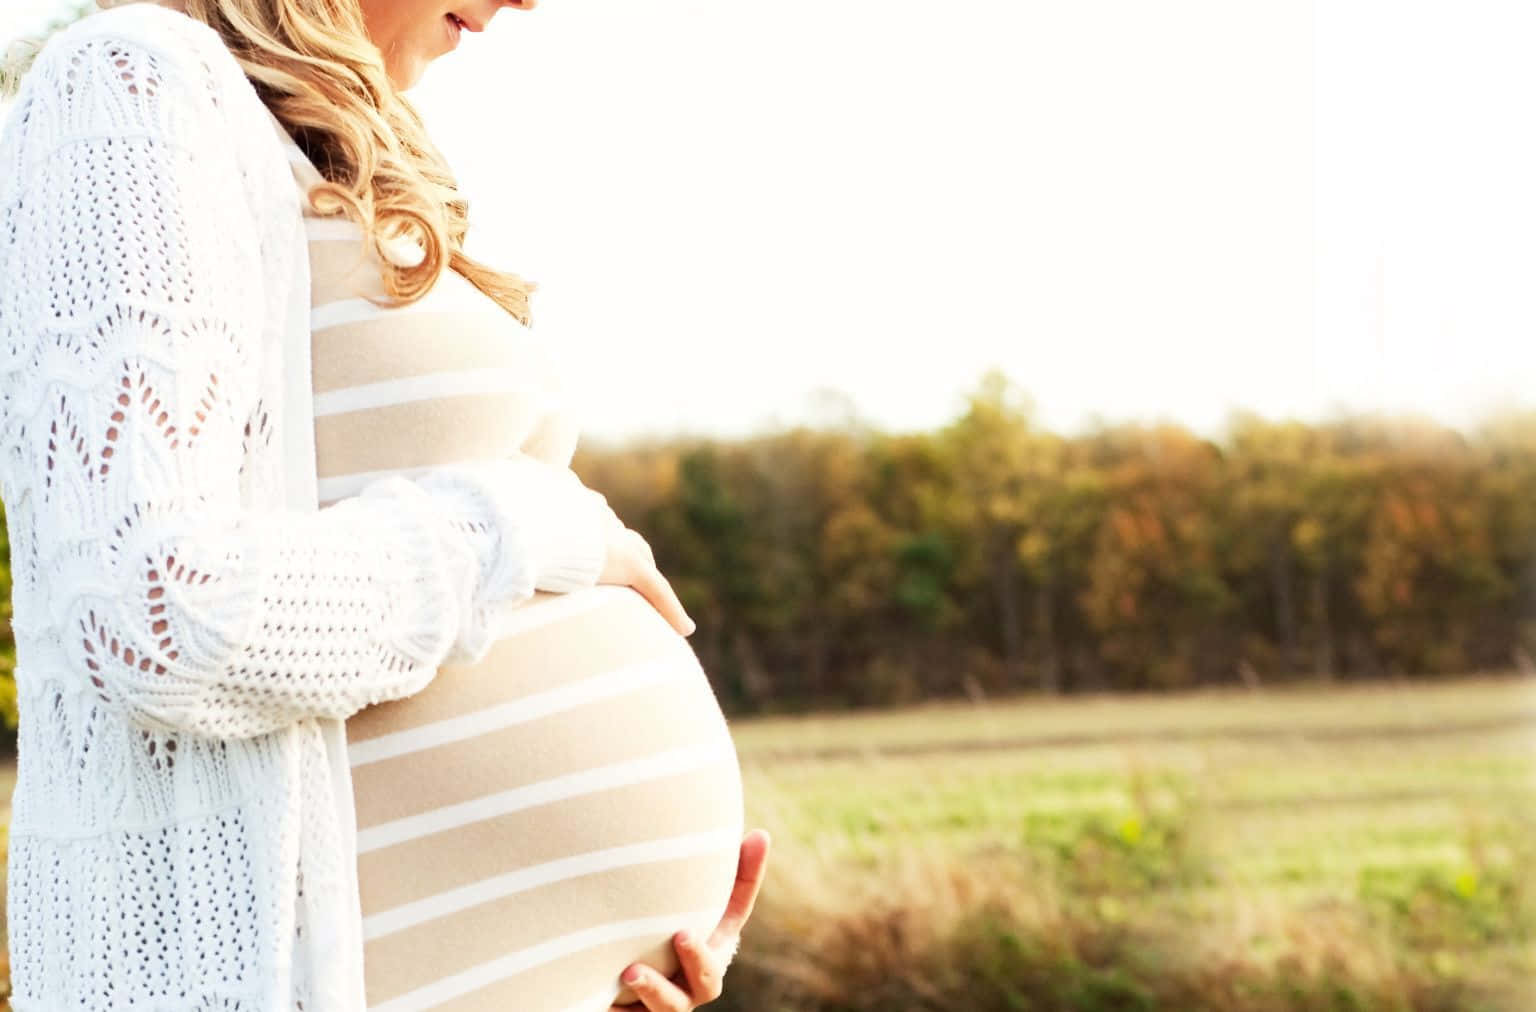 Joyful pregnant woman gazing at ultrasonic scans on a pleasant day.